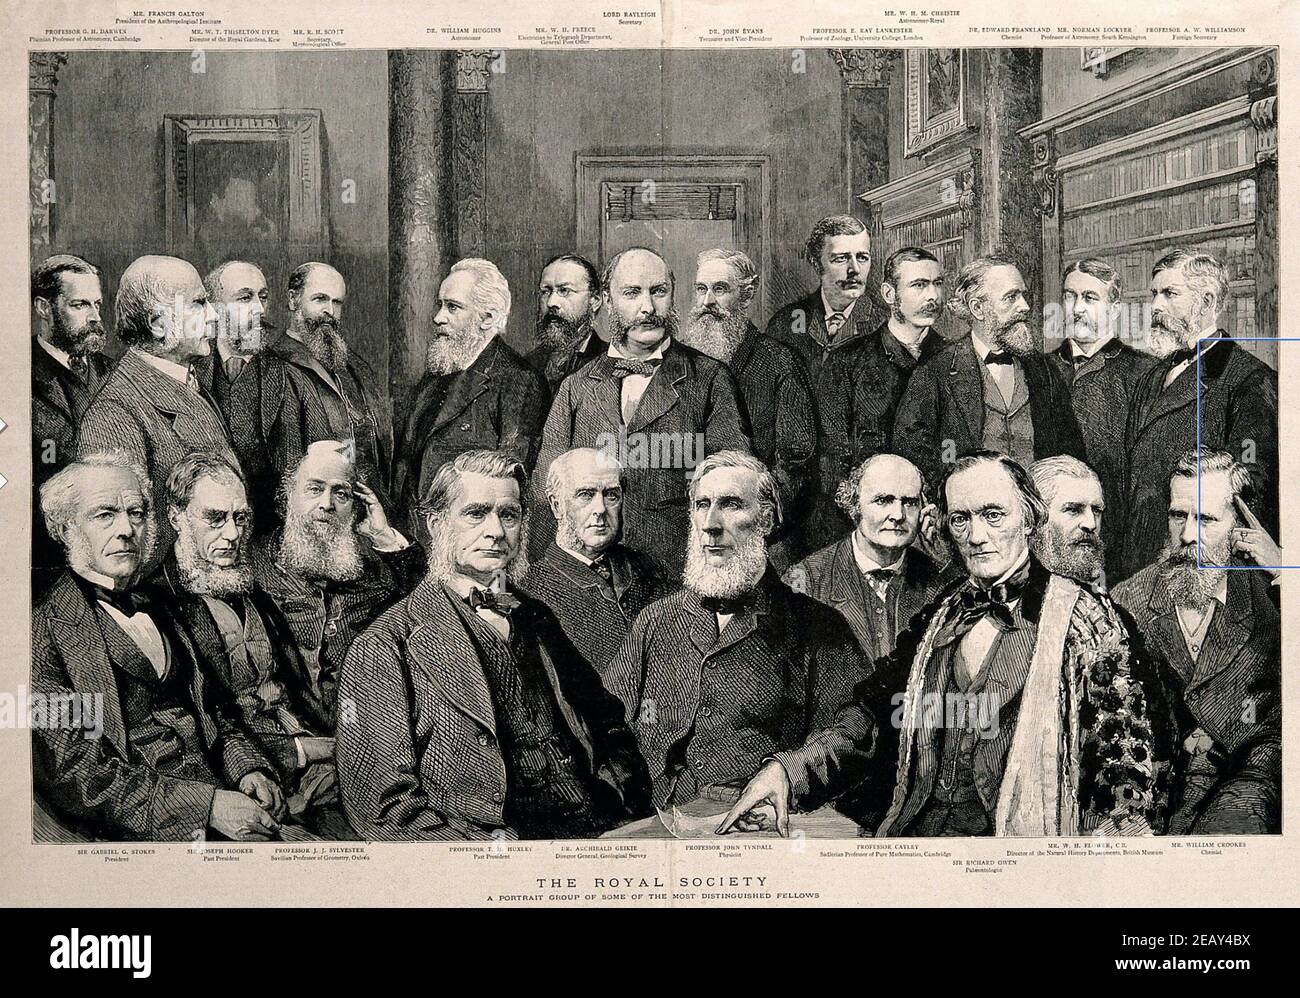 MITGLIEDER der ROYAL SOCIETY 1885, darunter sitzende Front Thomas Huxley, JohnTyndall, Richard Owen Stockfoto